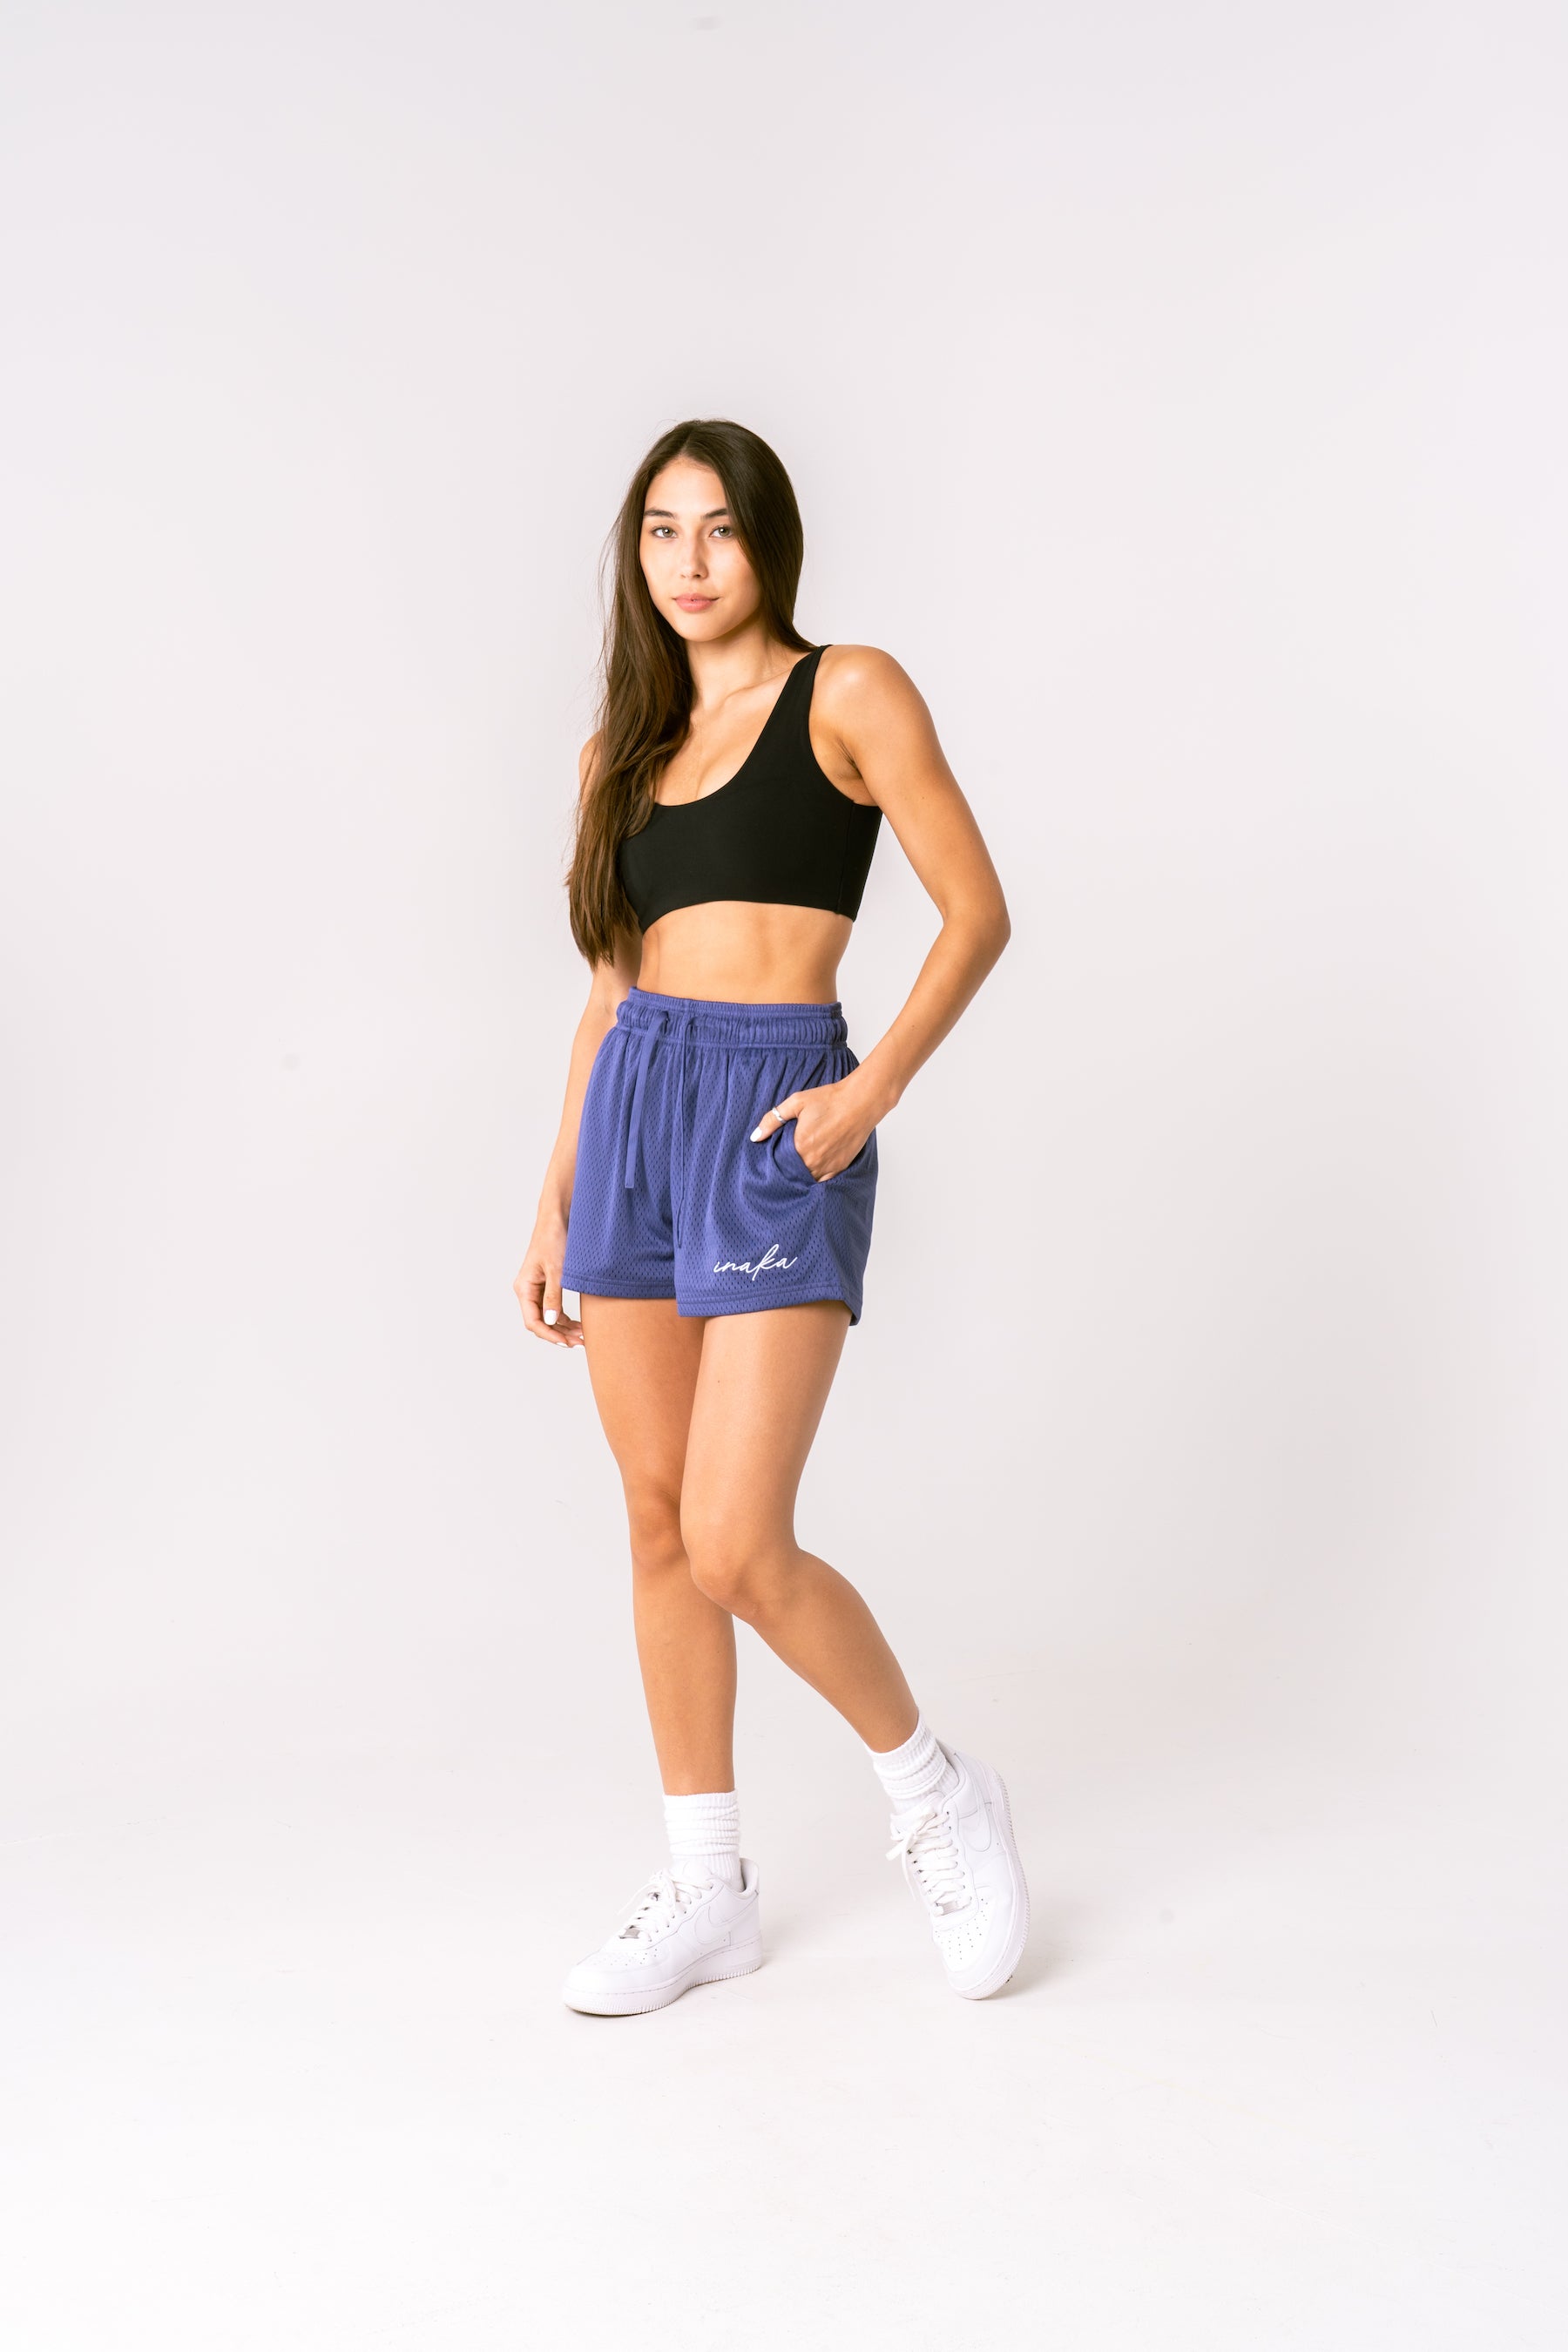 Women's Basic Shorts - Cobalt Blue